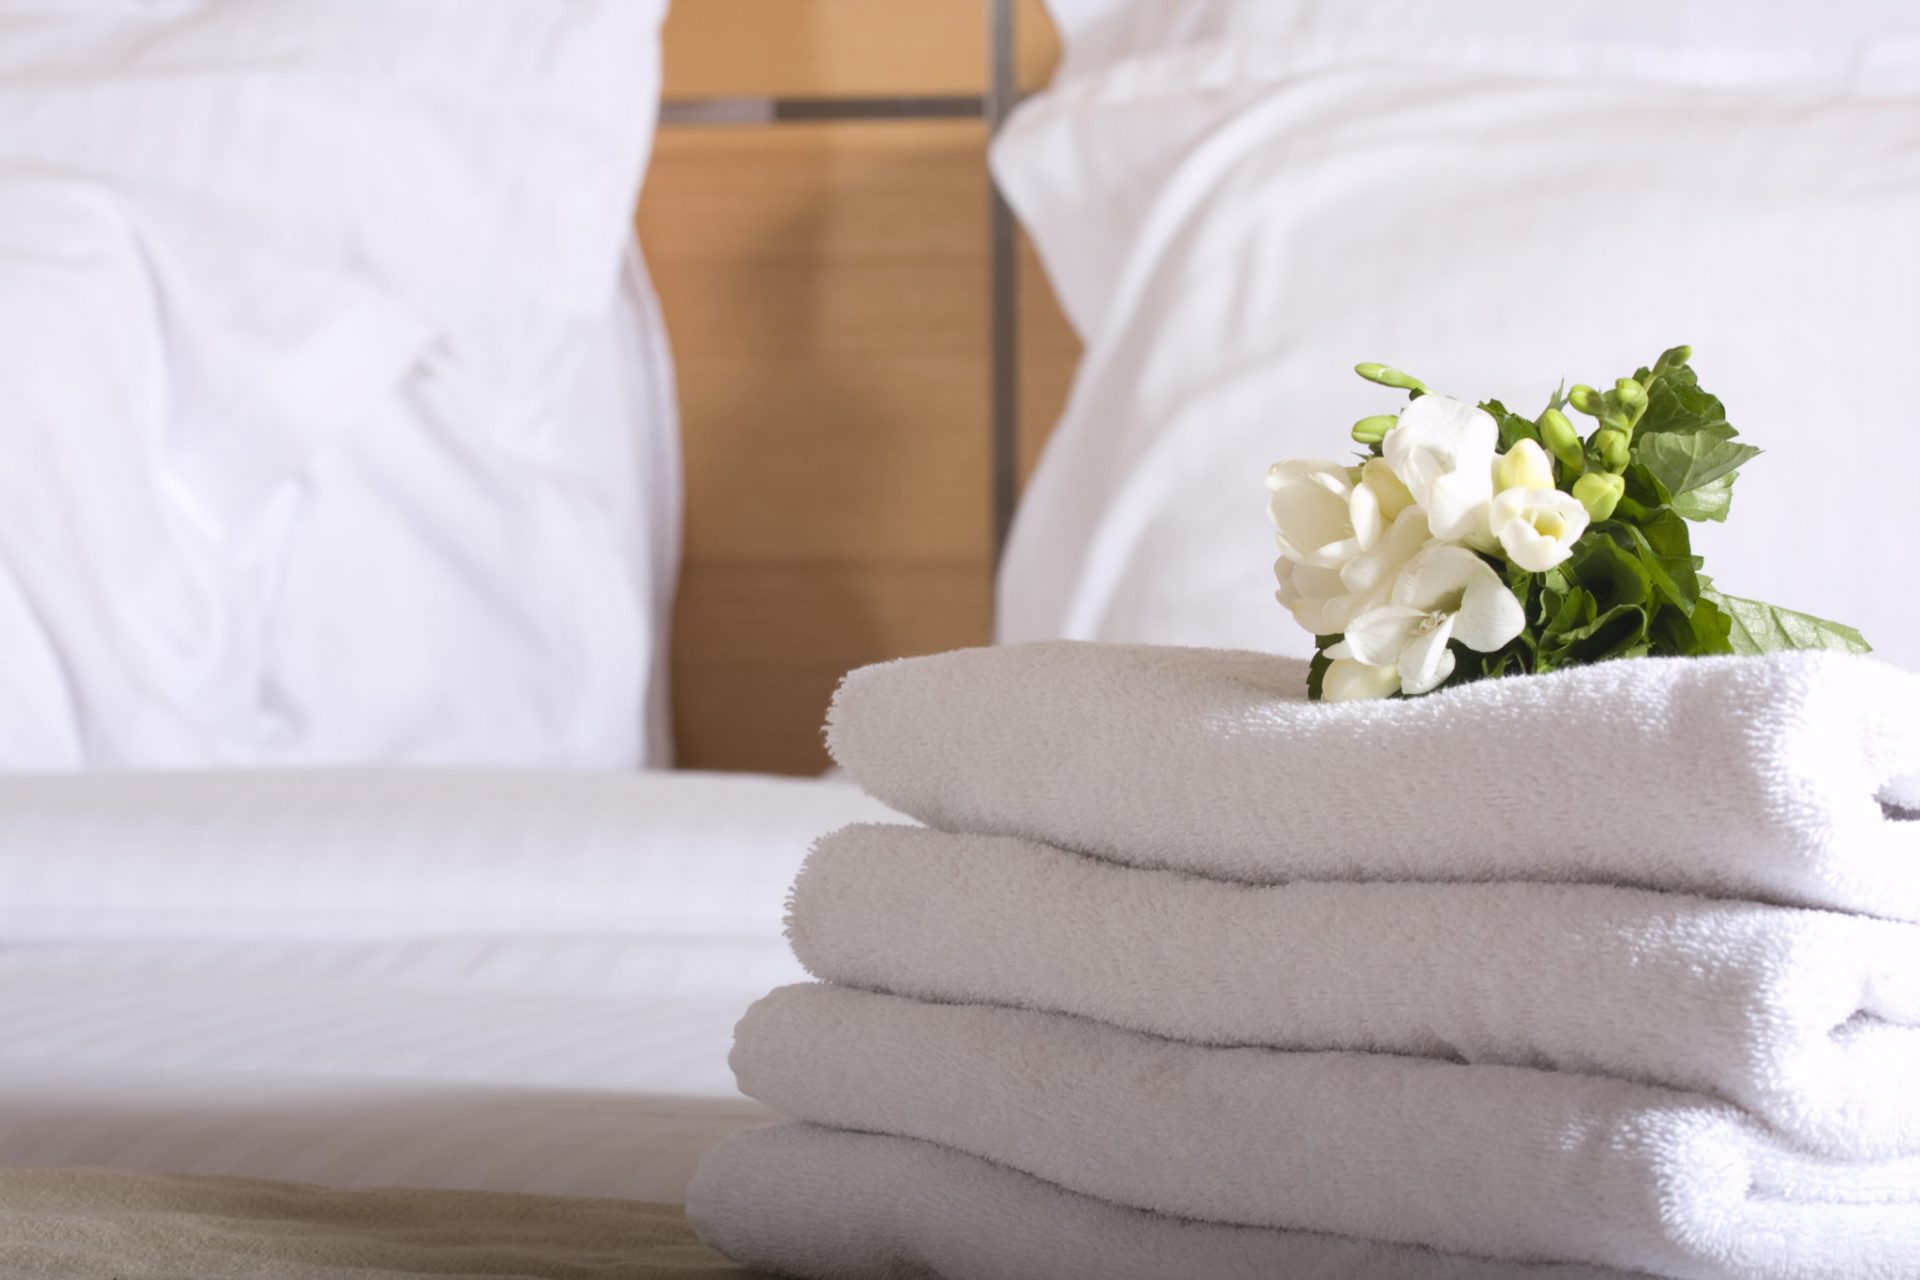 Полотенце на кровати. Чистое белье. Текстиль полотенца. Полотенца для гостиниц. Полотенца на постели.